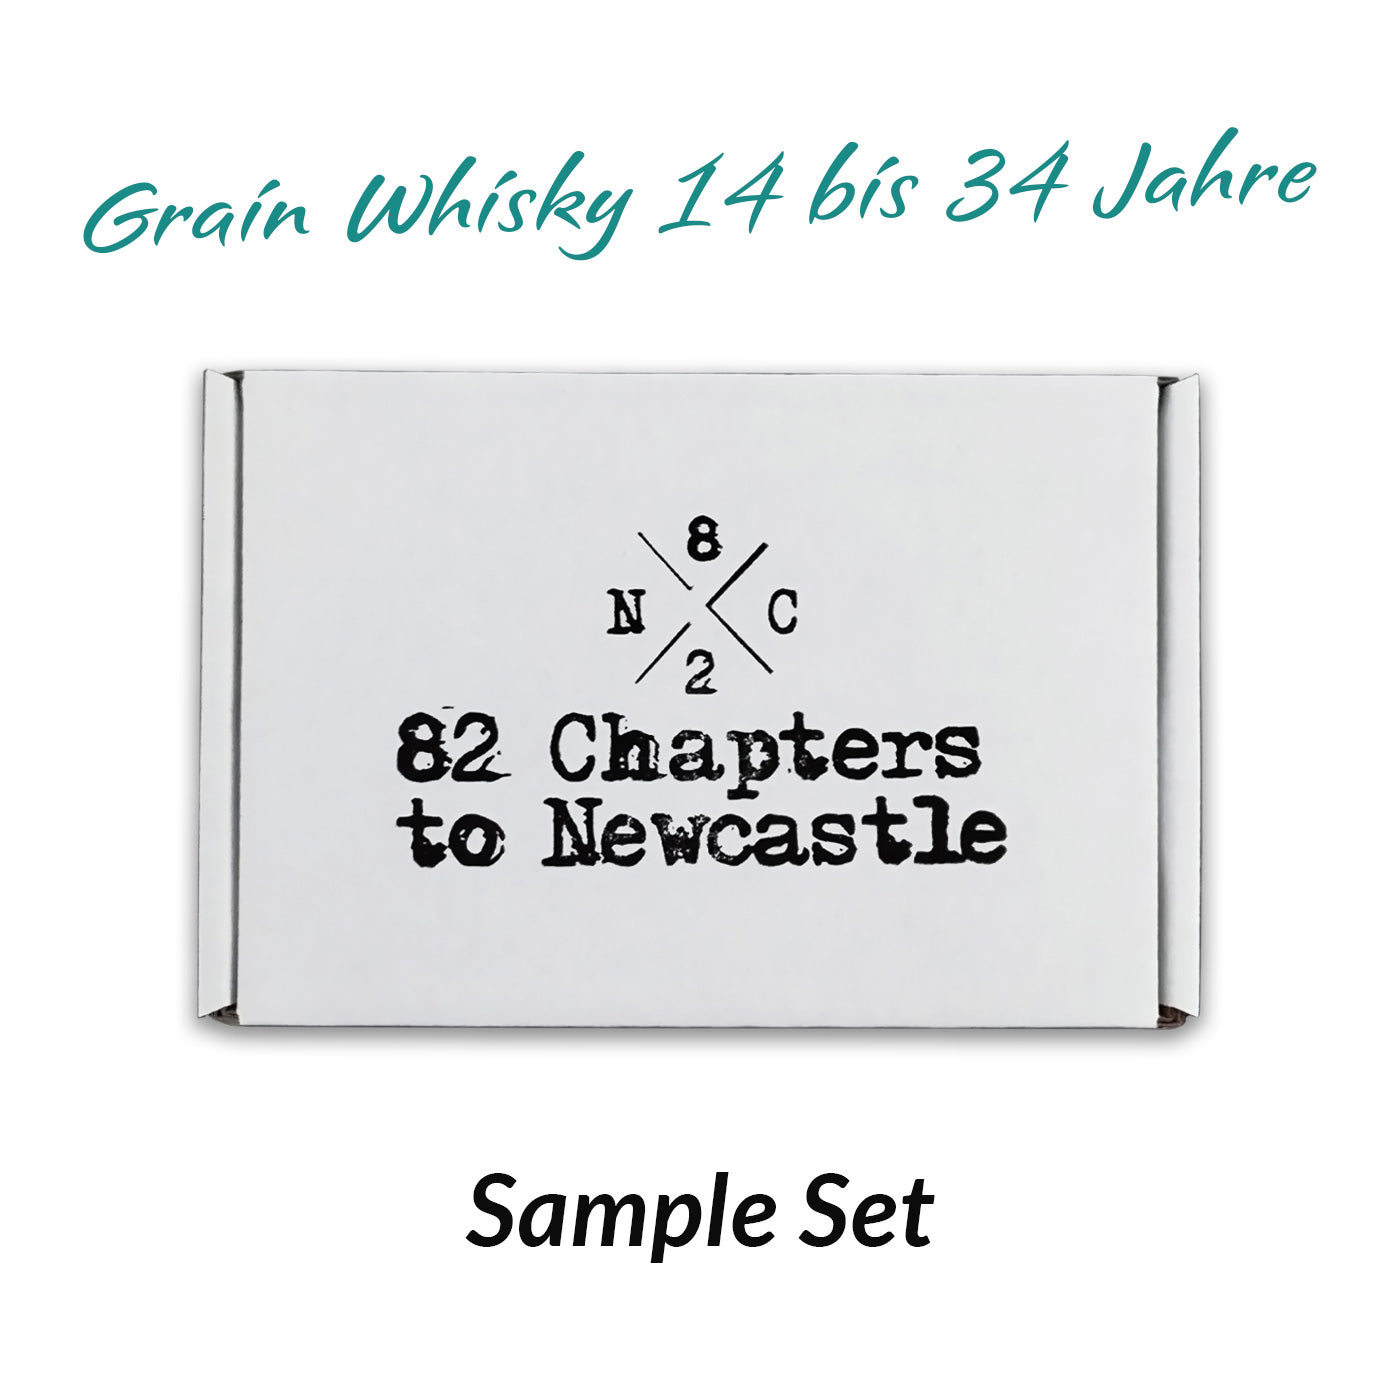 Sample Set - Grain Whisky 14-34 Jahre